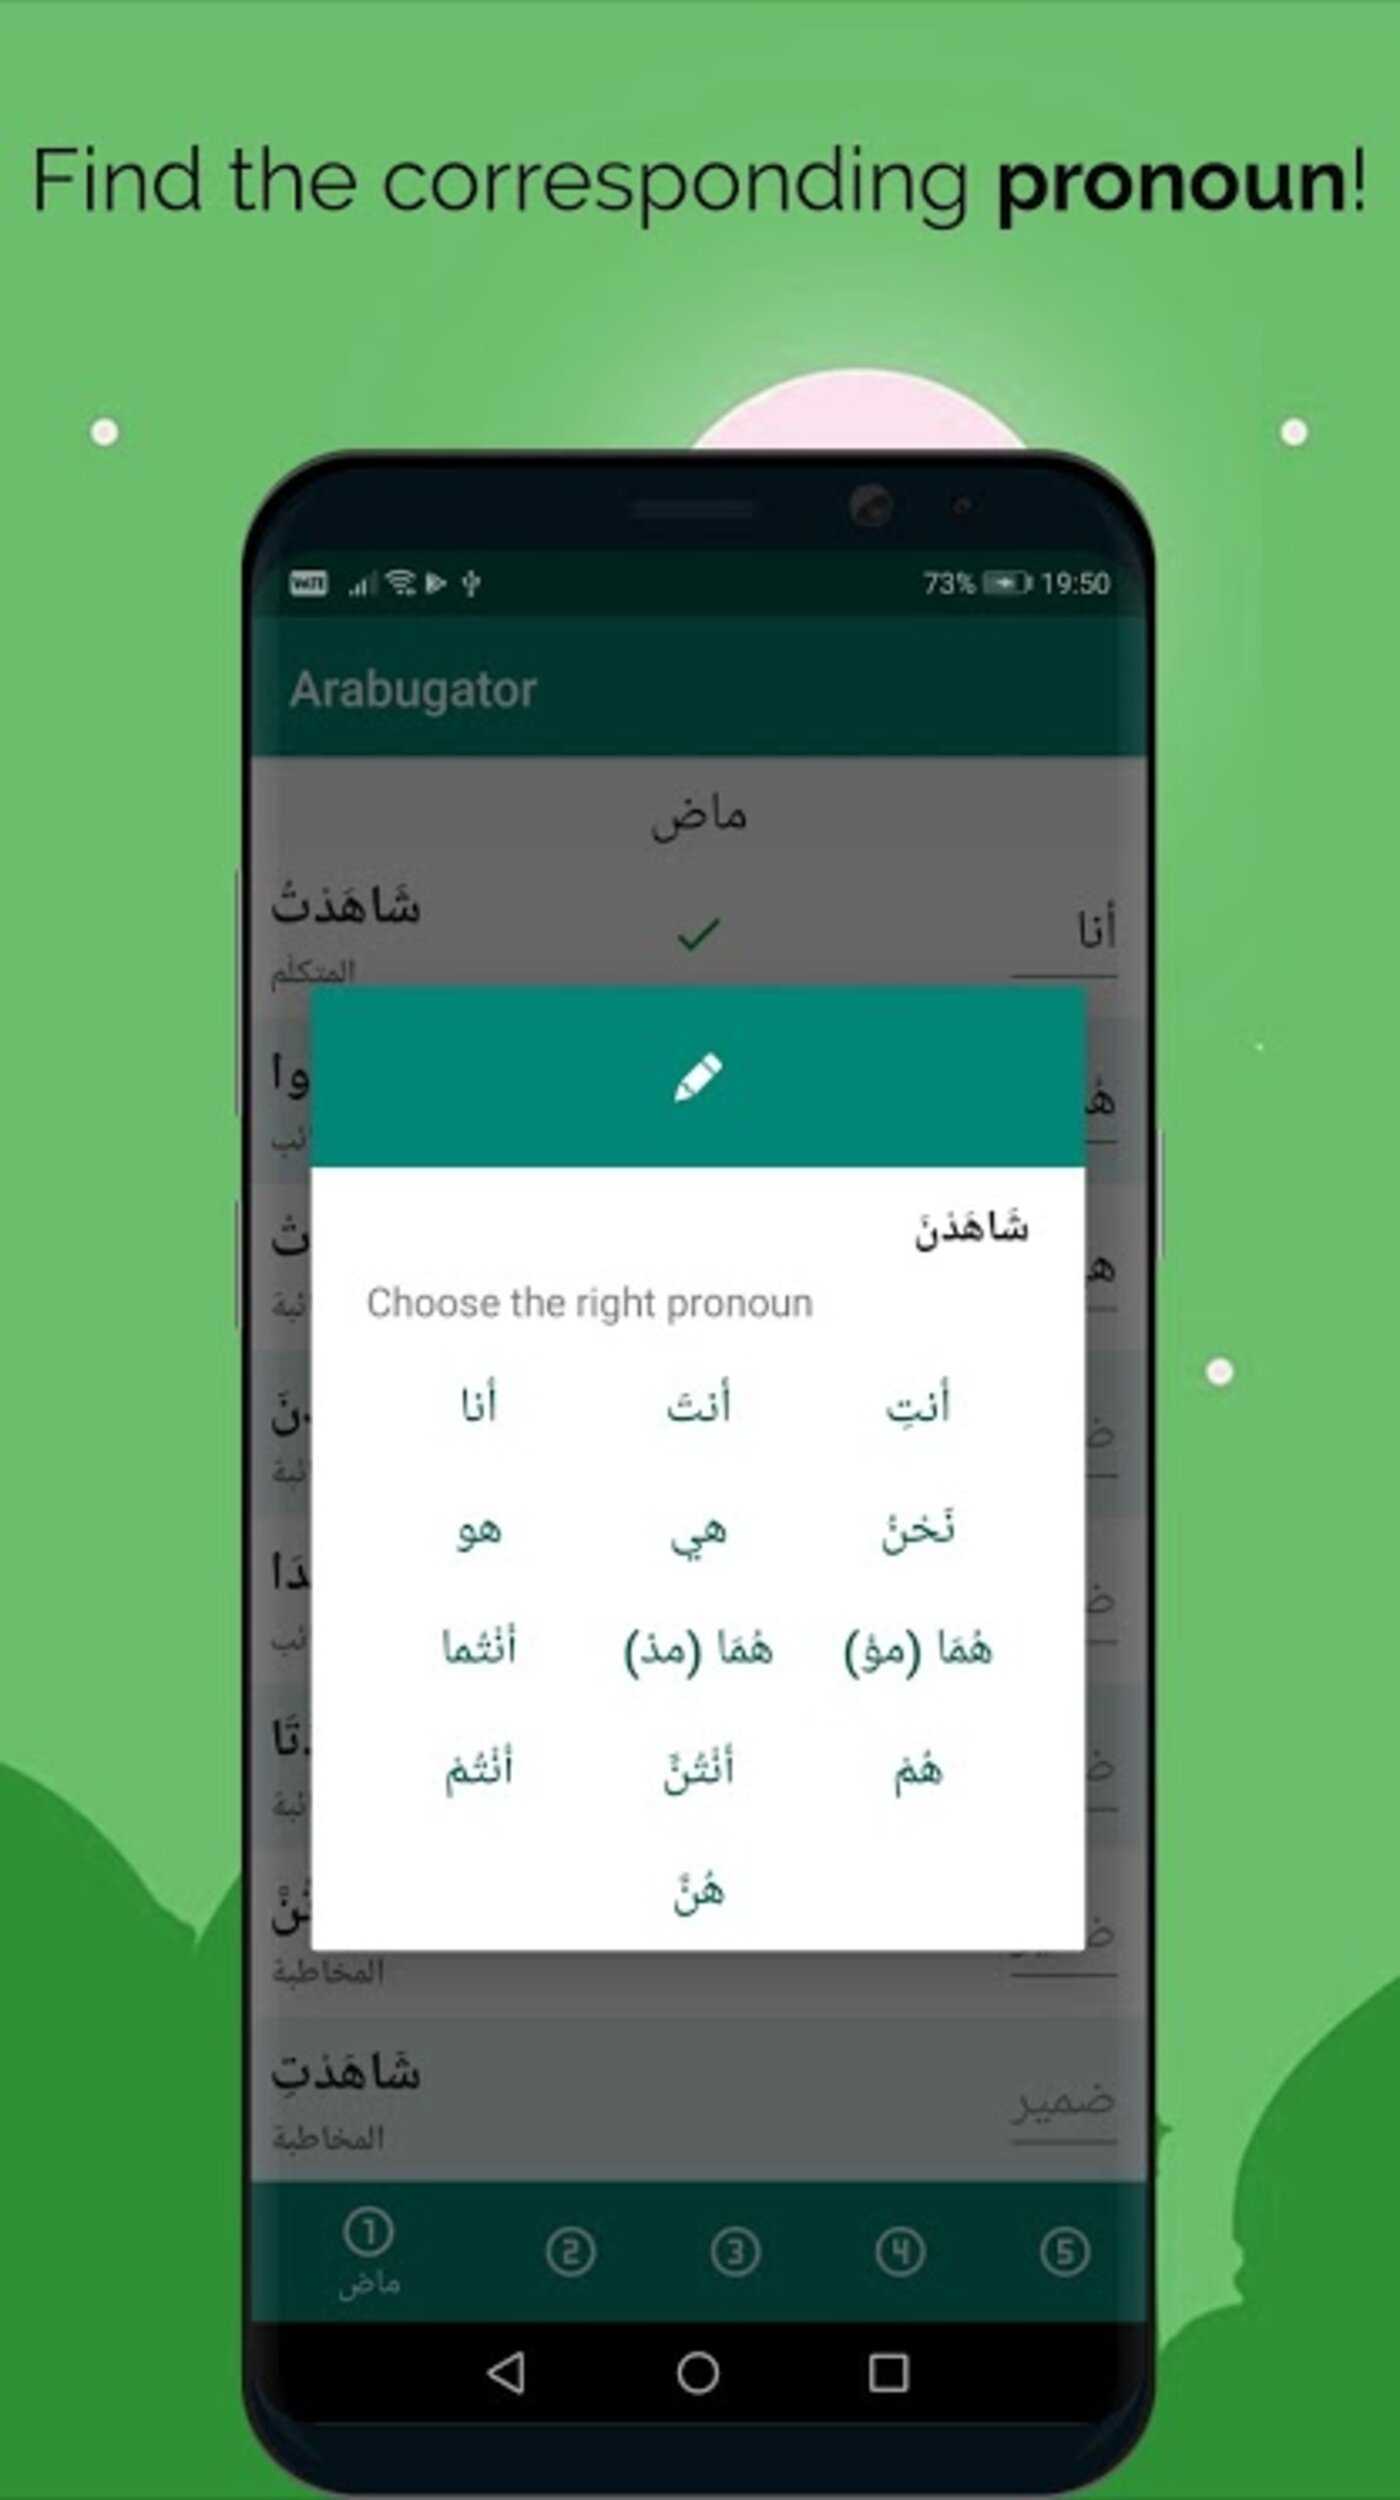 Arabugator I – Arabic conjugation game v3.9 (Premium) APK